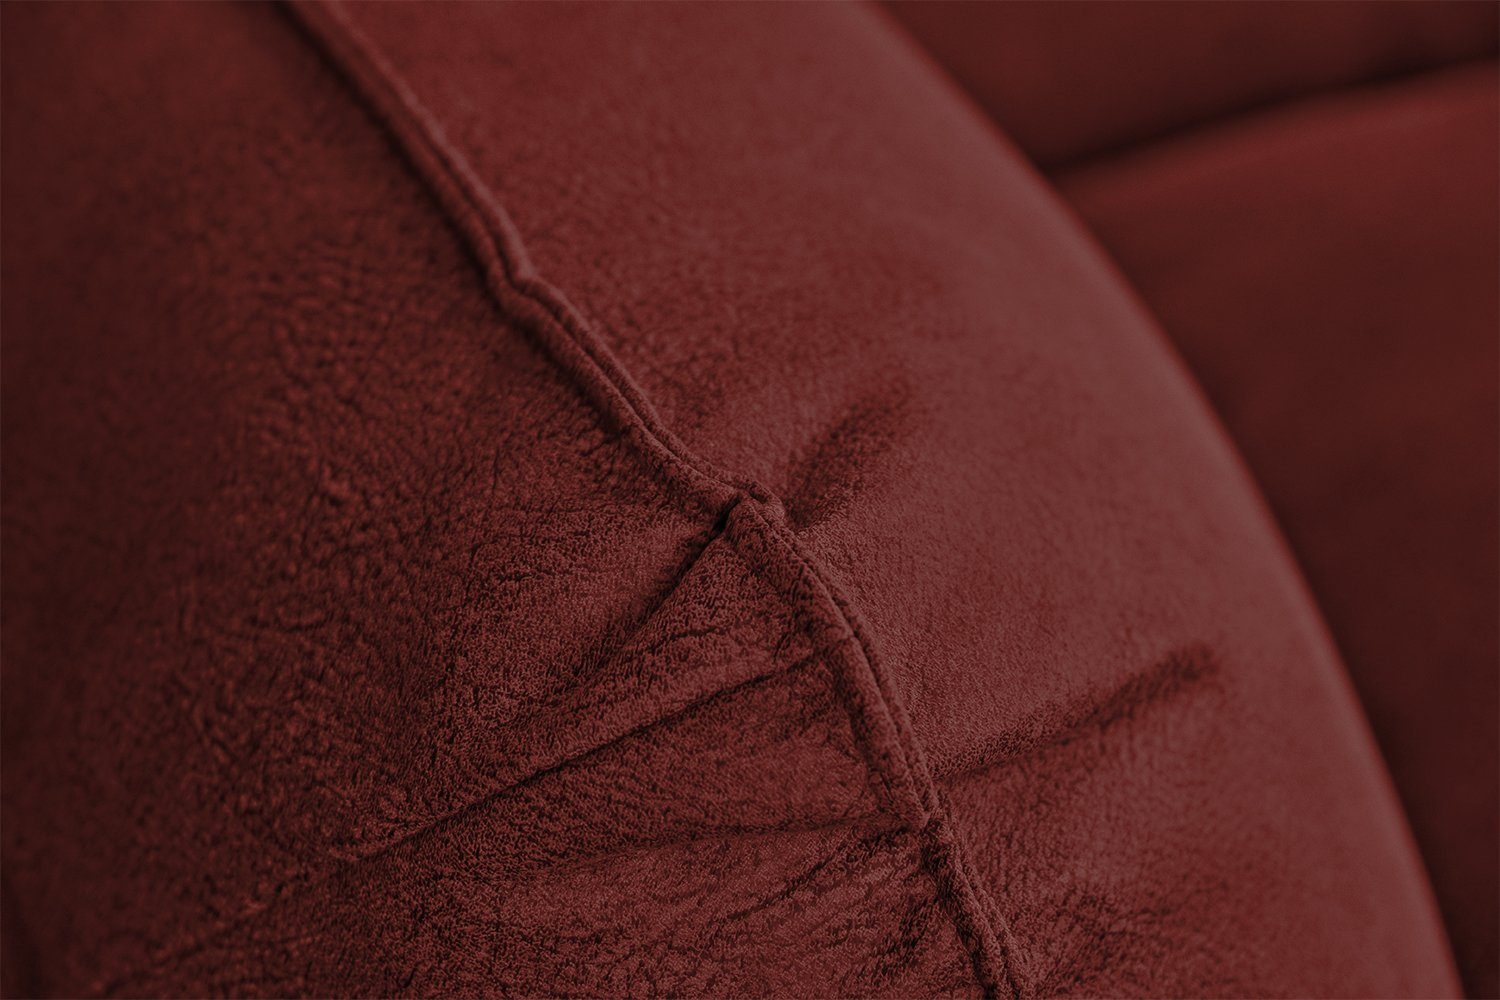 KAWOLA Big-Sofa DAVITO, Longchair Leder versch. Farben Vintagelook, im Lederimitat oder